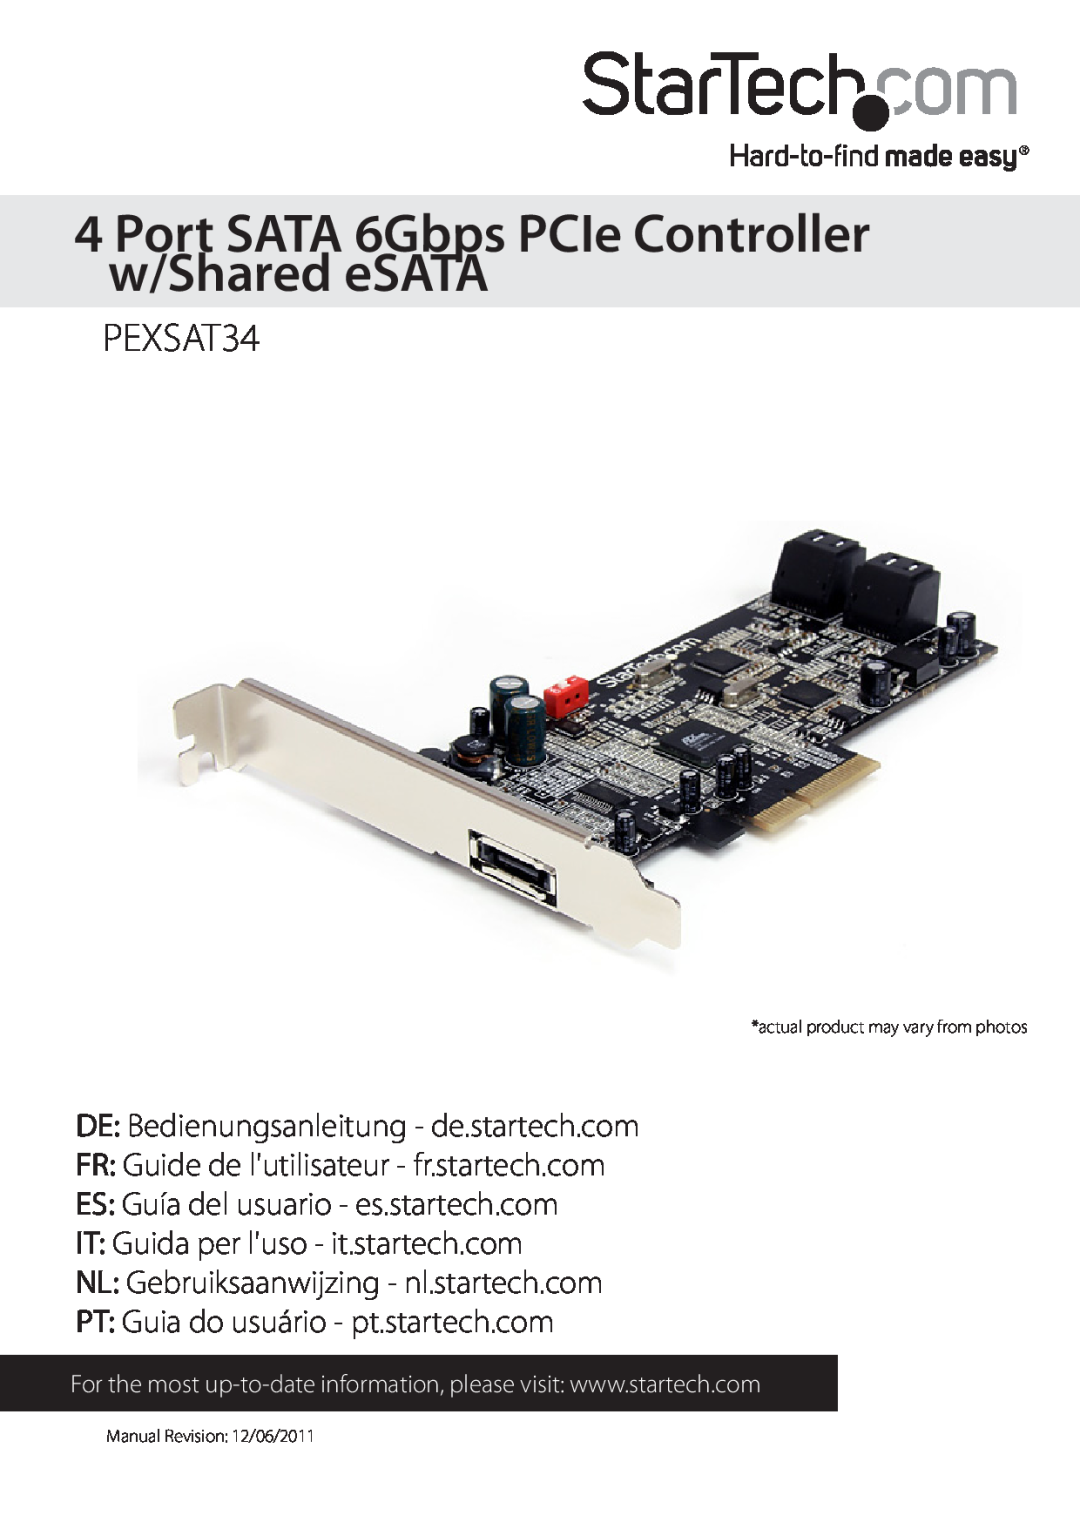 StarTech.com PEXSAT34 manual Port SATA 6Gbps PCIe Controller w/Shared eSATA, DE Bedienungsanleitung - de.startech.com 